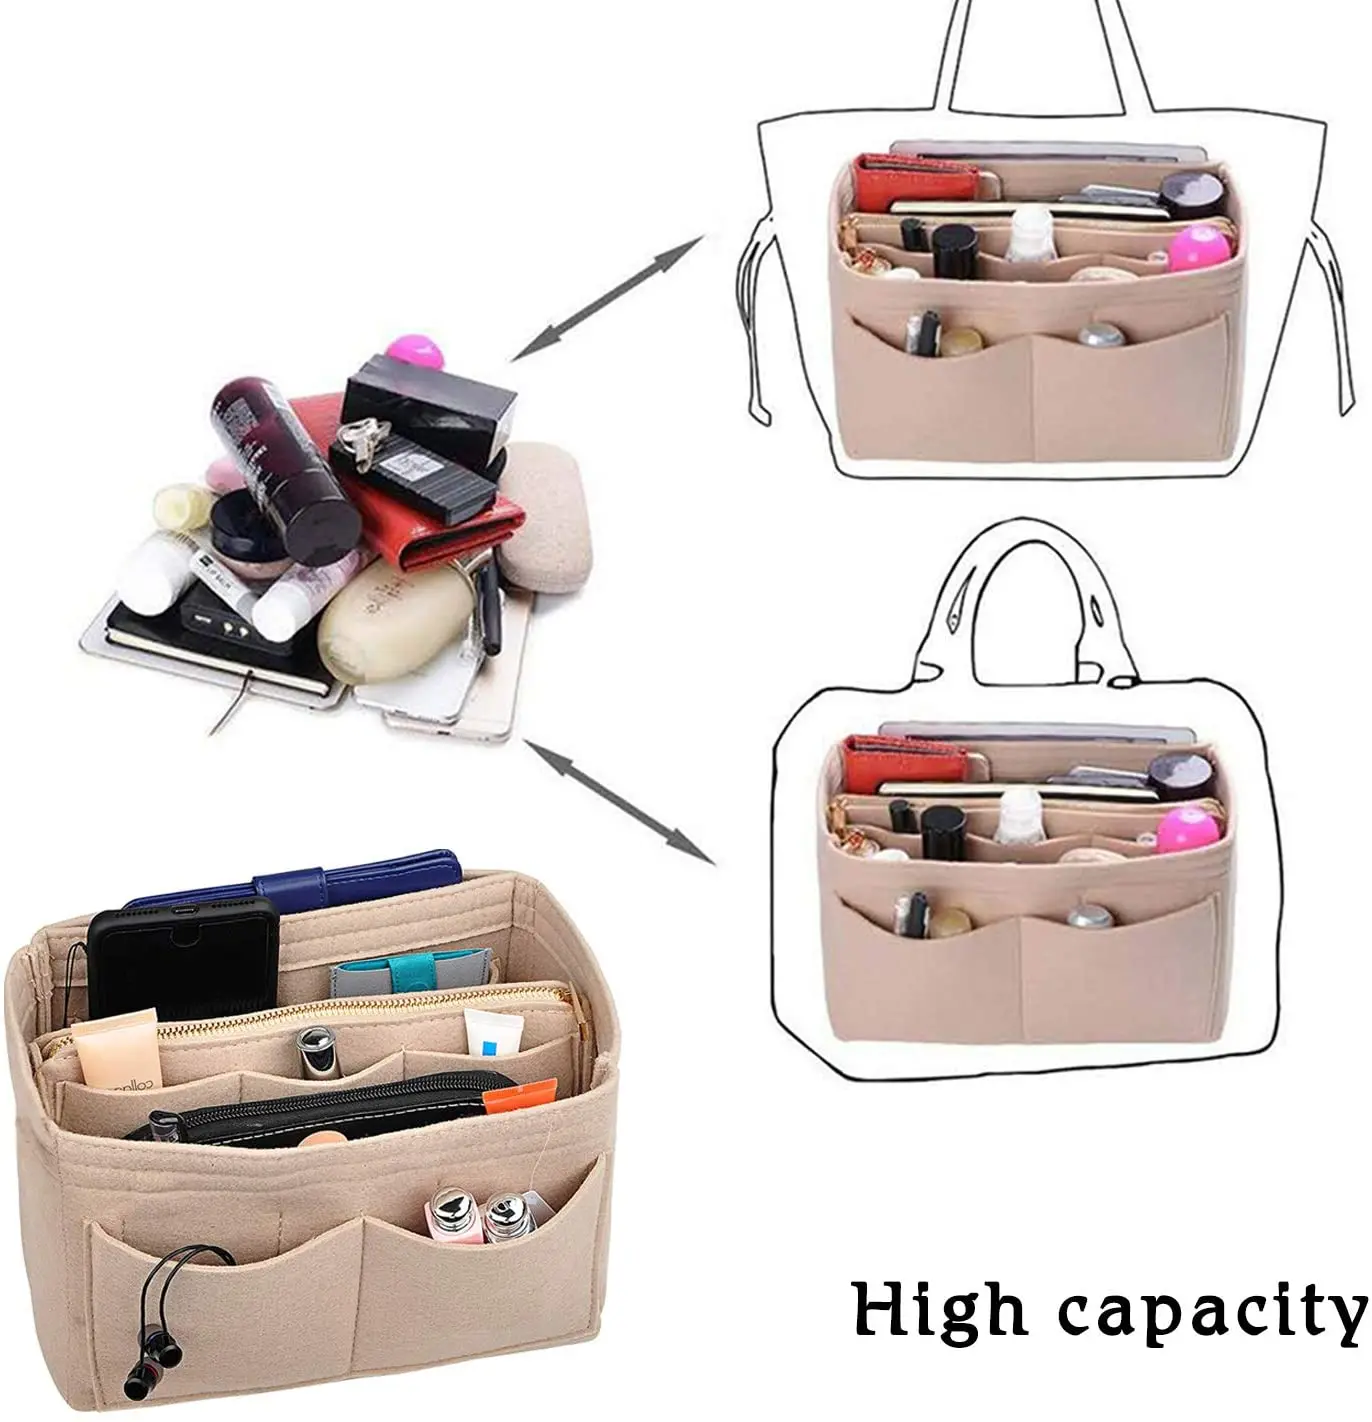 For 26 Bag Purse Felt Insert Organizer Makeup Handbag Travel Inner